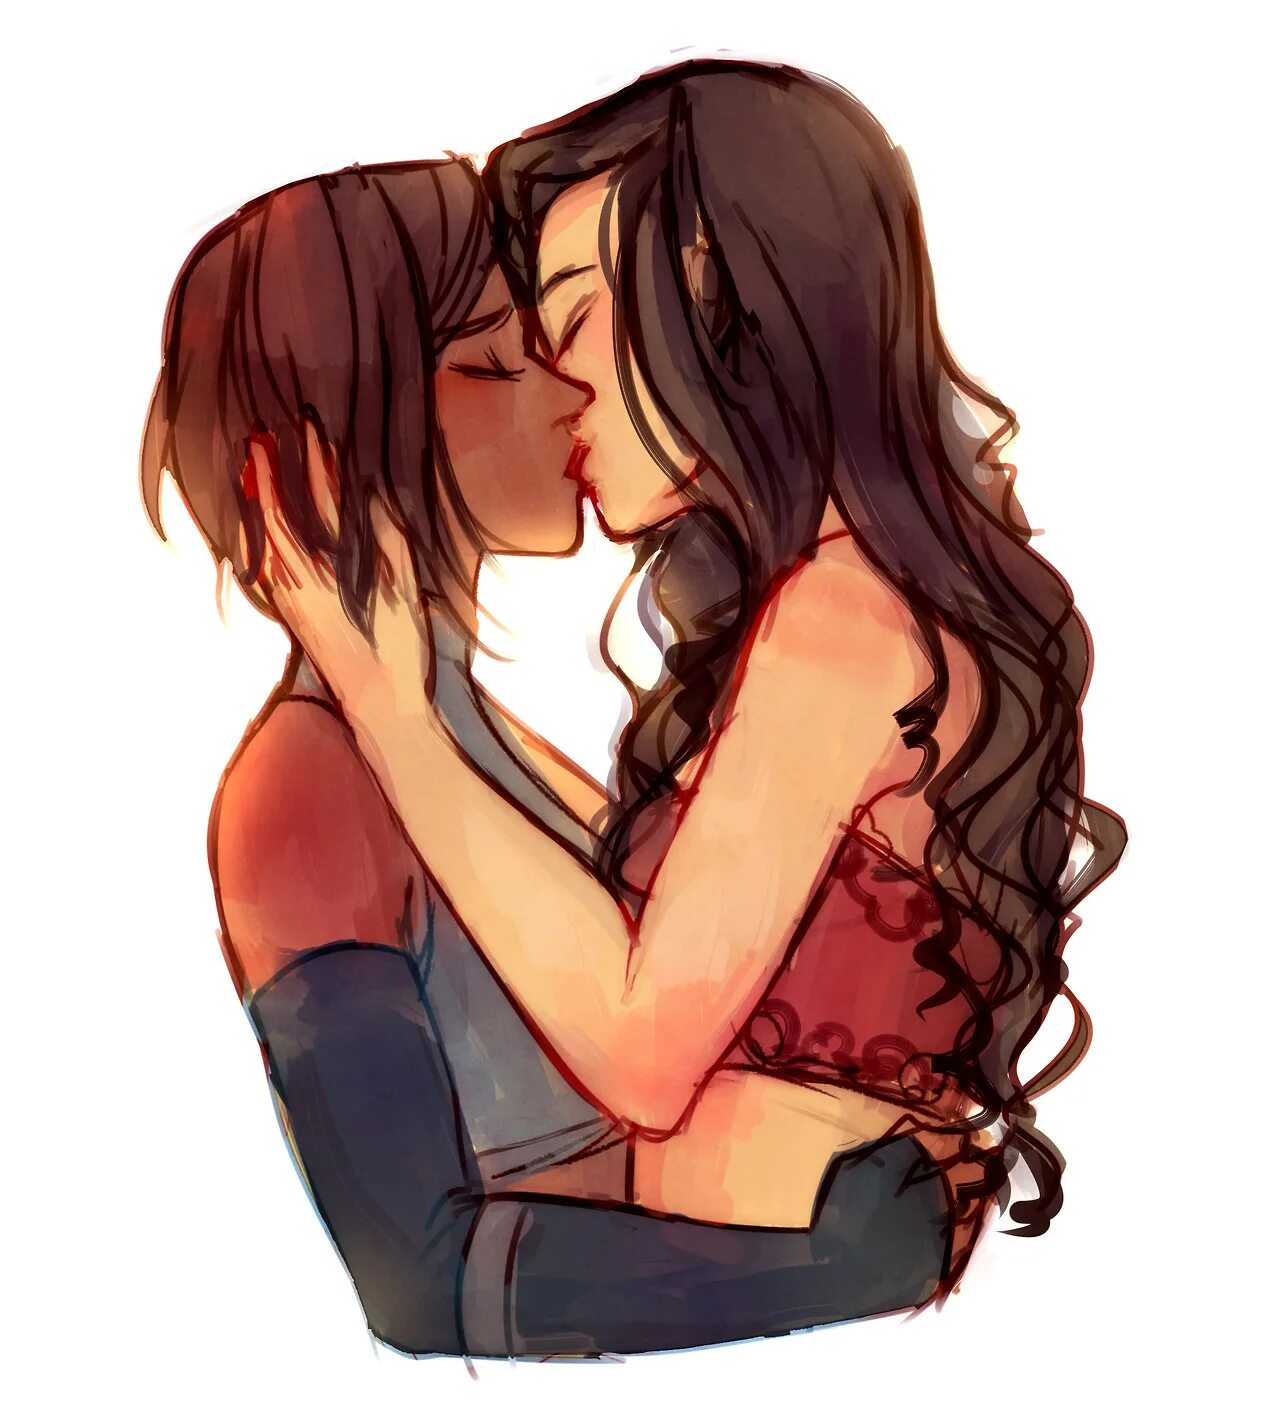 Lesbians 2 girl. Фемслэш корра. Две девушки поцелуй арт. Любовь двух девушек арты. Две девочки поцелуй арт.